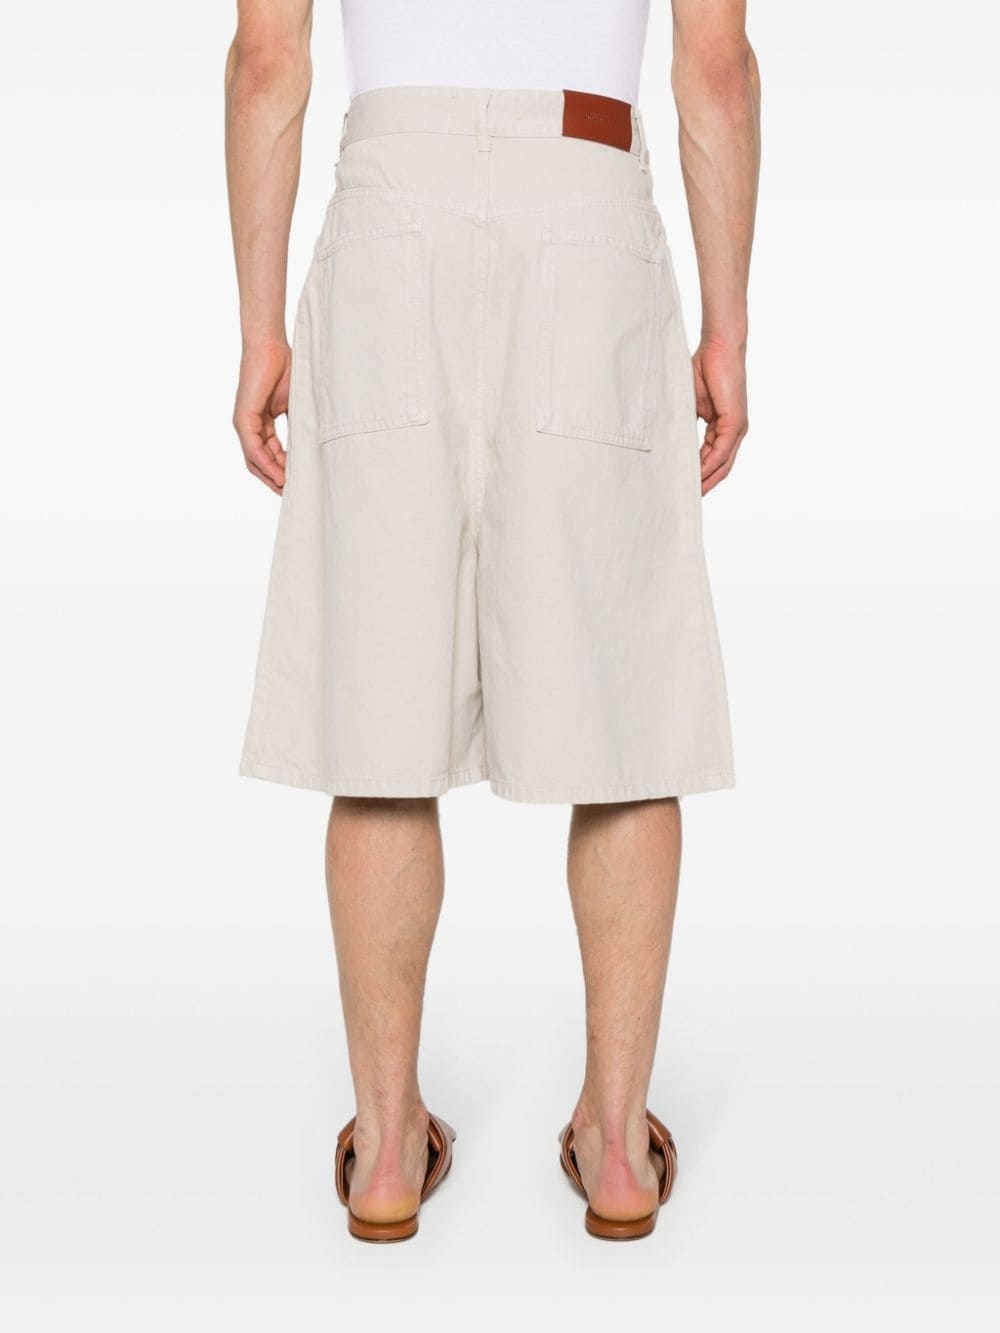 Reverse denim shorts - 4